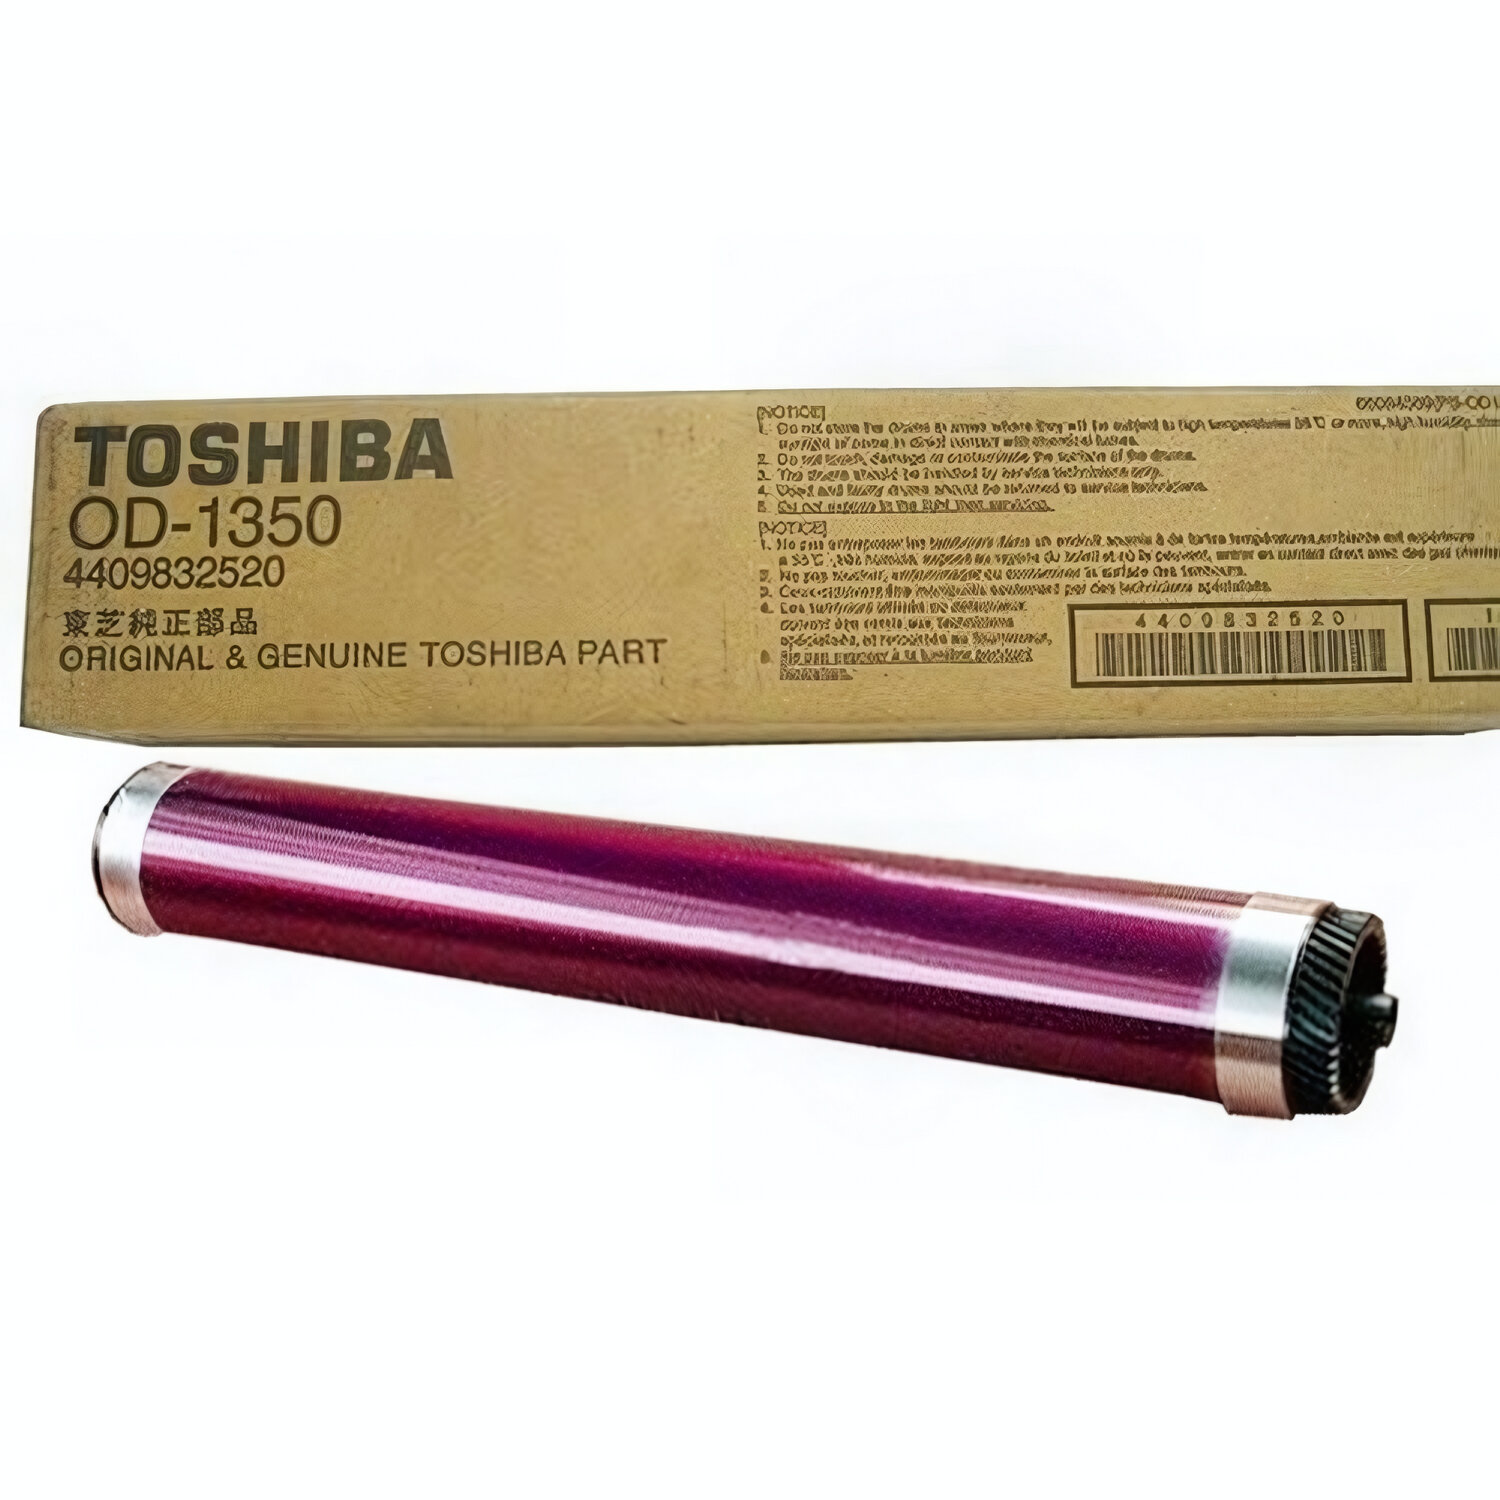 4409832520/66084569 Барабан Toshiba OD-1350 для моделей 1340/1350/1360/1370 - ресурс 30 000 страниц